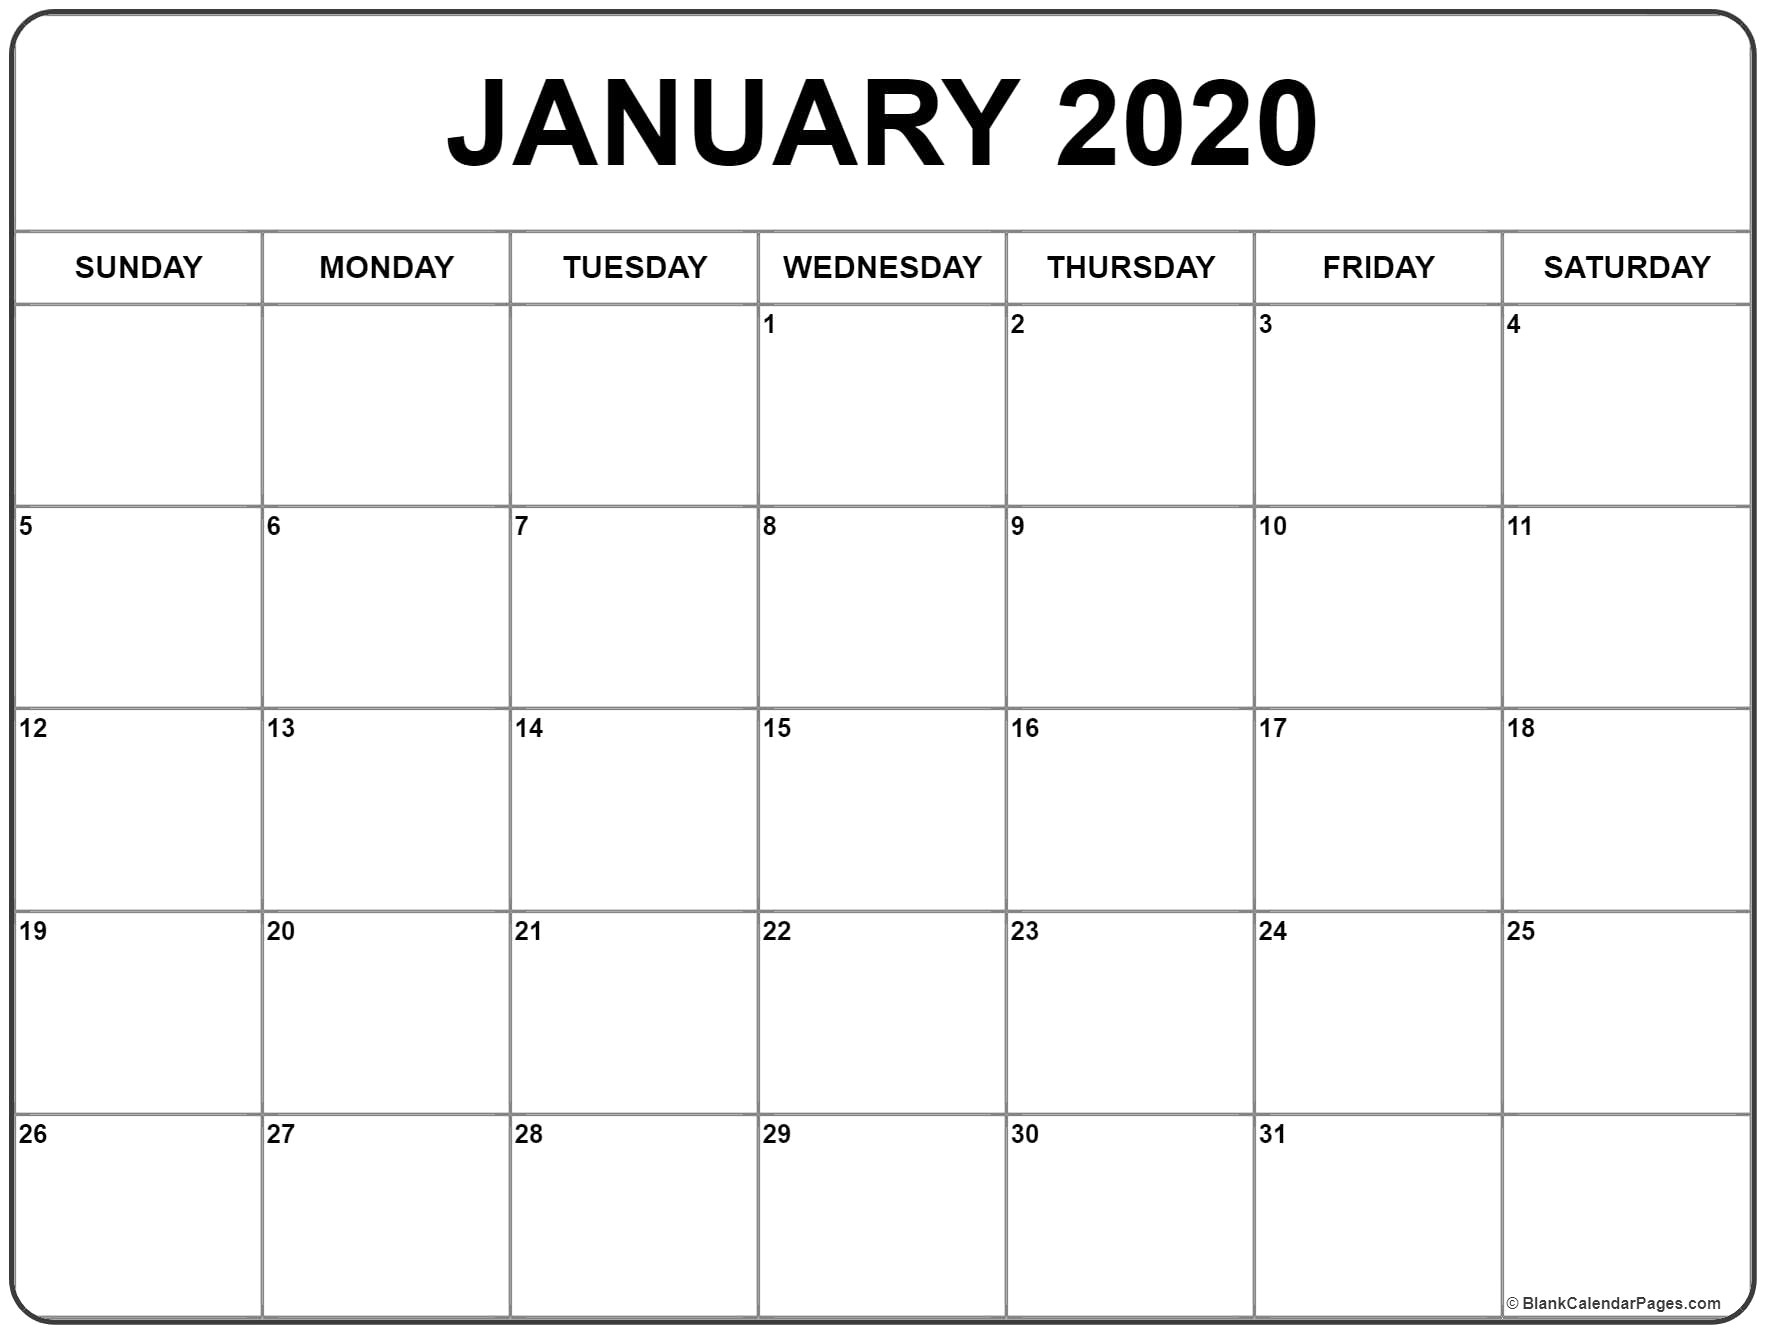 January 2020 Calendar B2 | Jcreview Tamil Calendar 2020 January